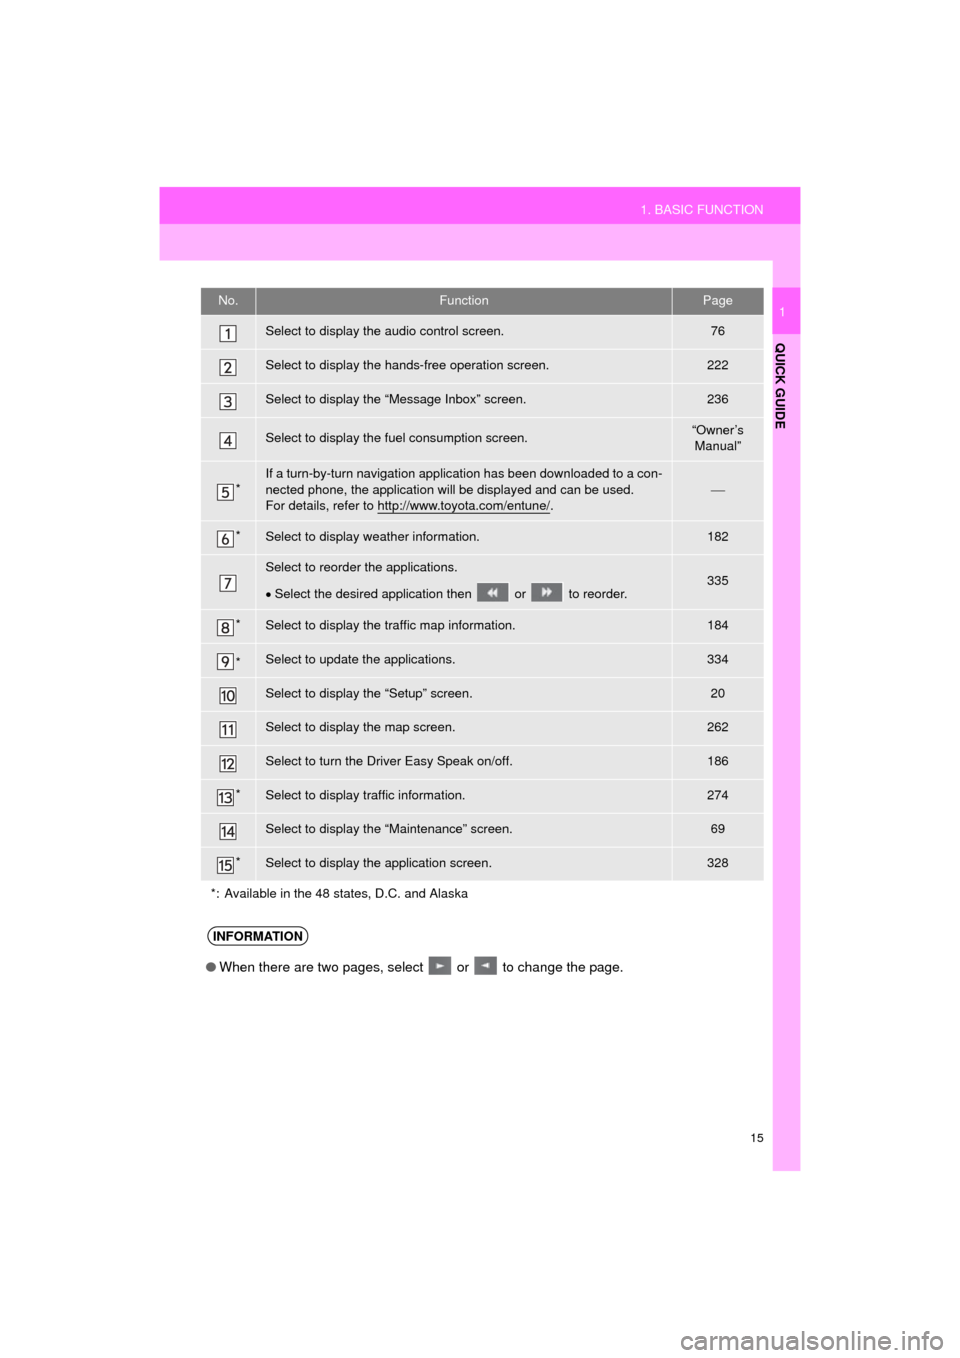 TOYOTA HIGHLANDER 2016 XU50 / 3.G Navigation Manual 15
1. BASIC FUNCTION
HIGHLANDER_Navi_U
QUICK GUIDE
1No.FunctionPage
Select to display the audio control screen.76
Select to display the hands-free operation screen.222
Select to display the “Message